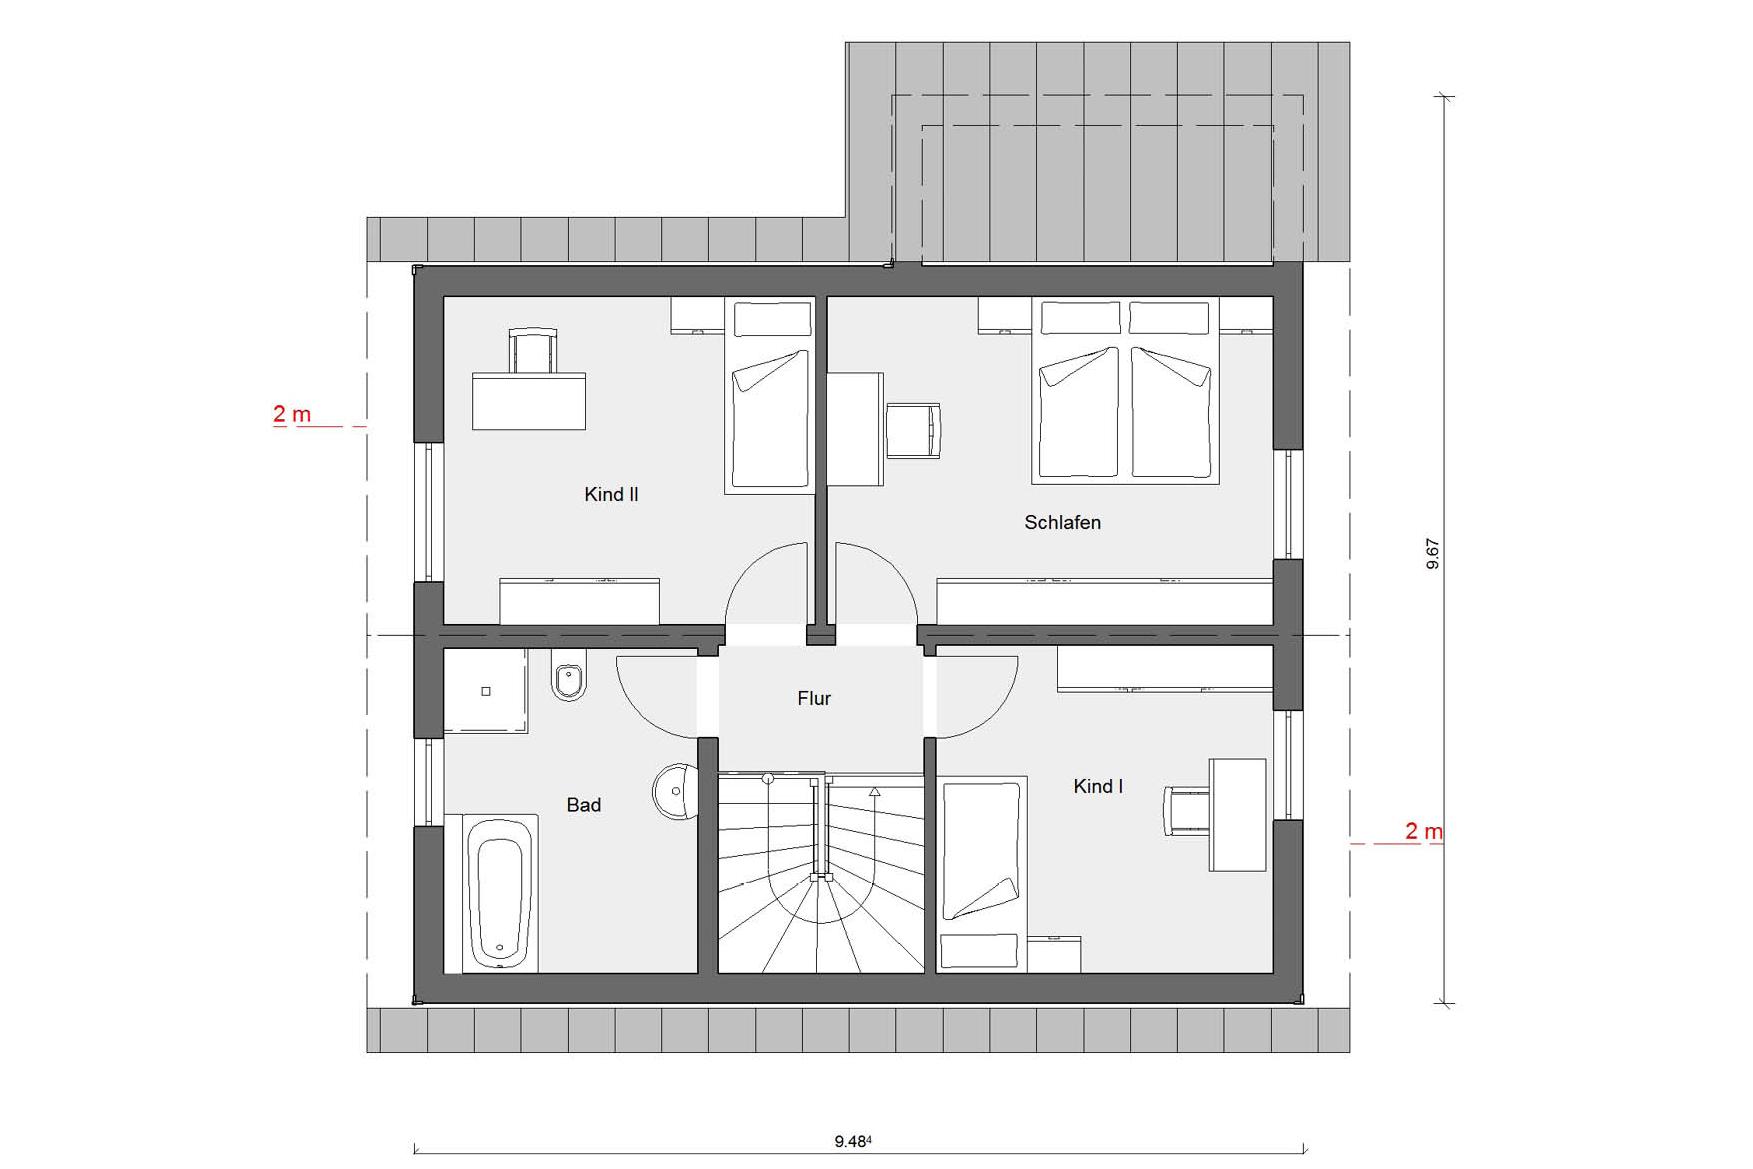 Attic floor plan E 15-127.10 Bay window at the house